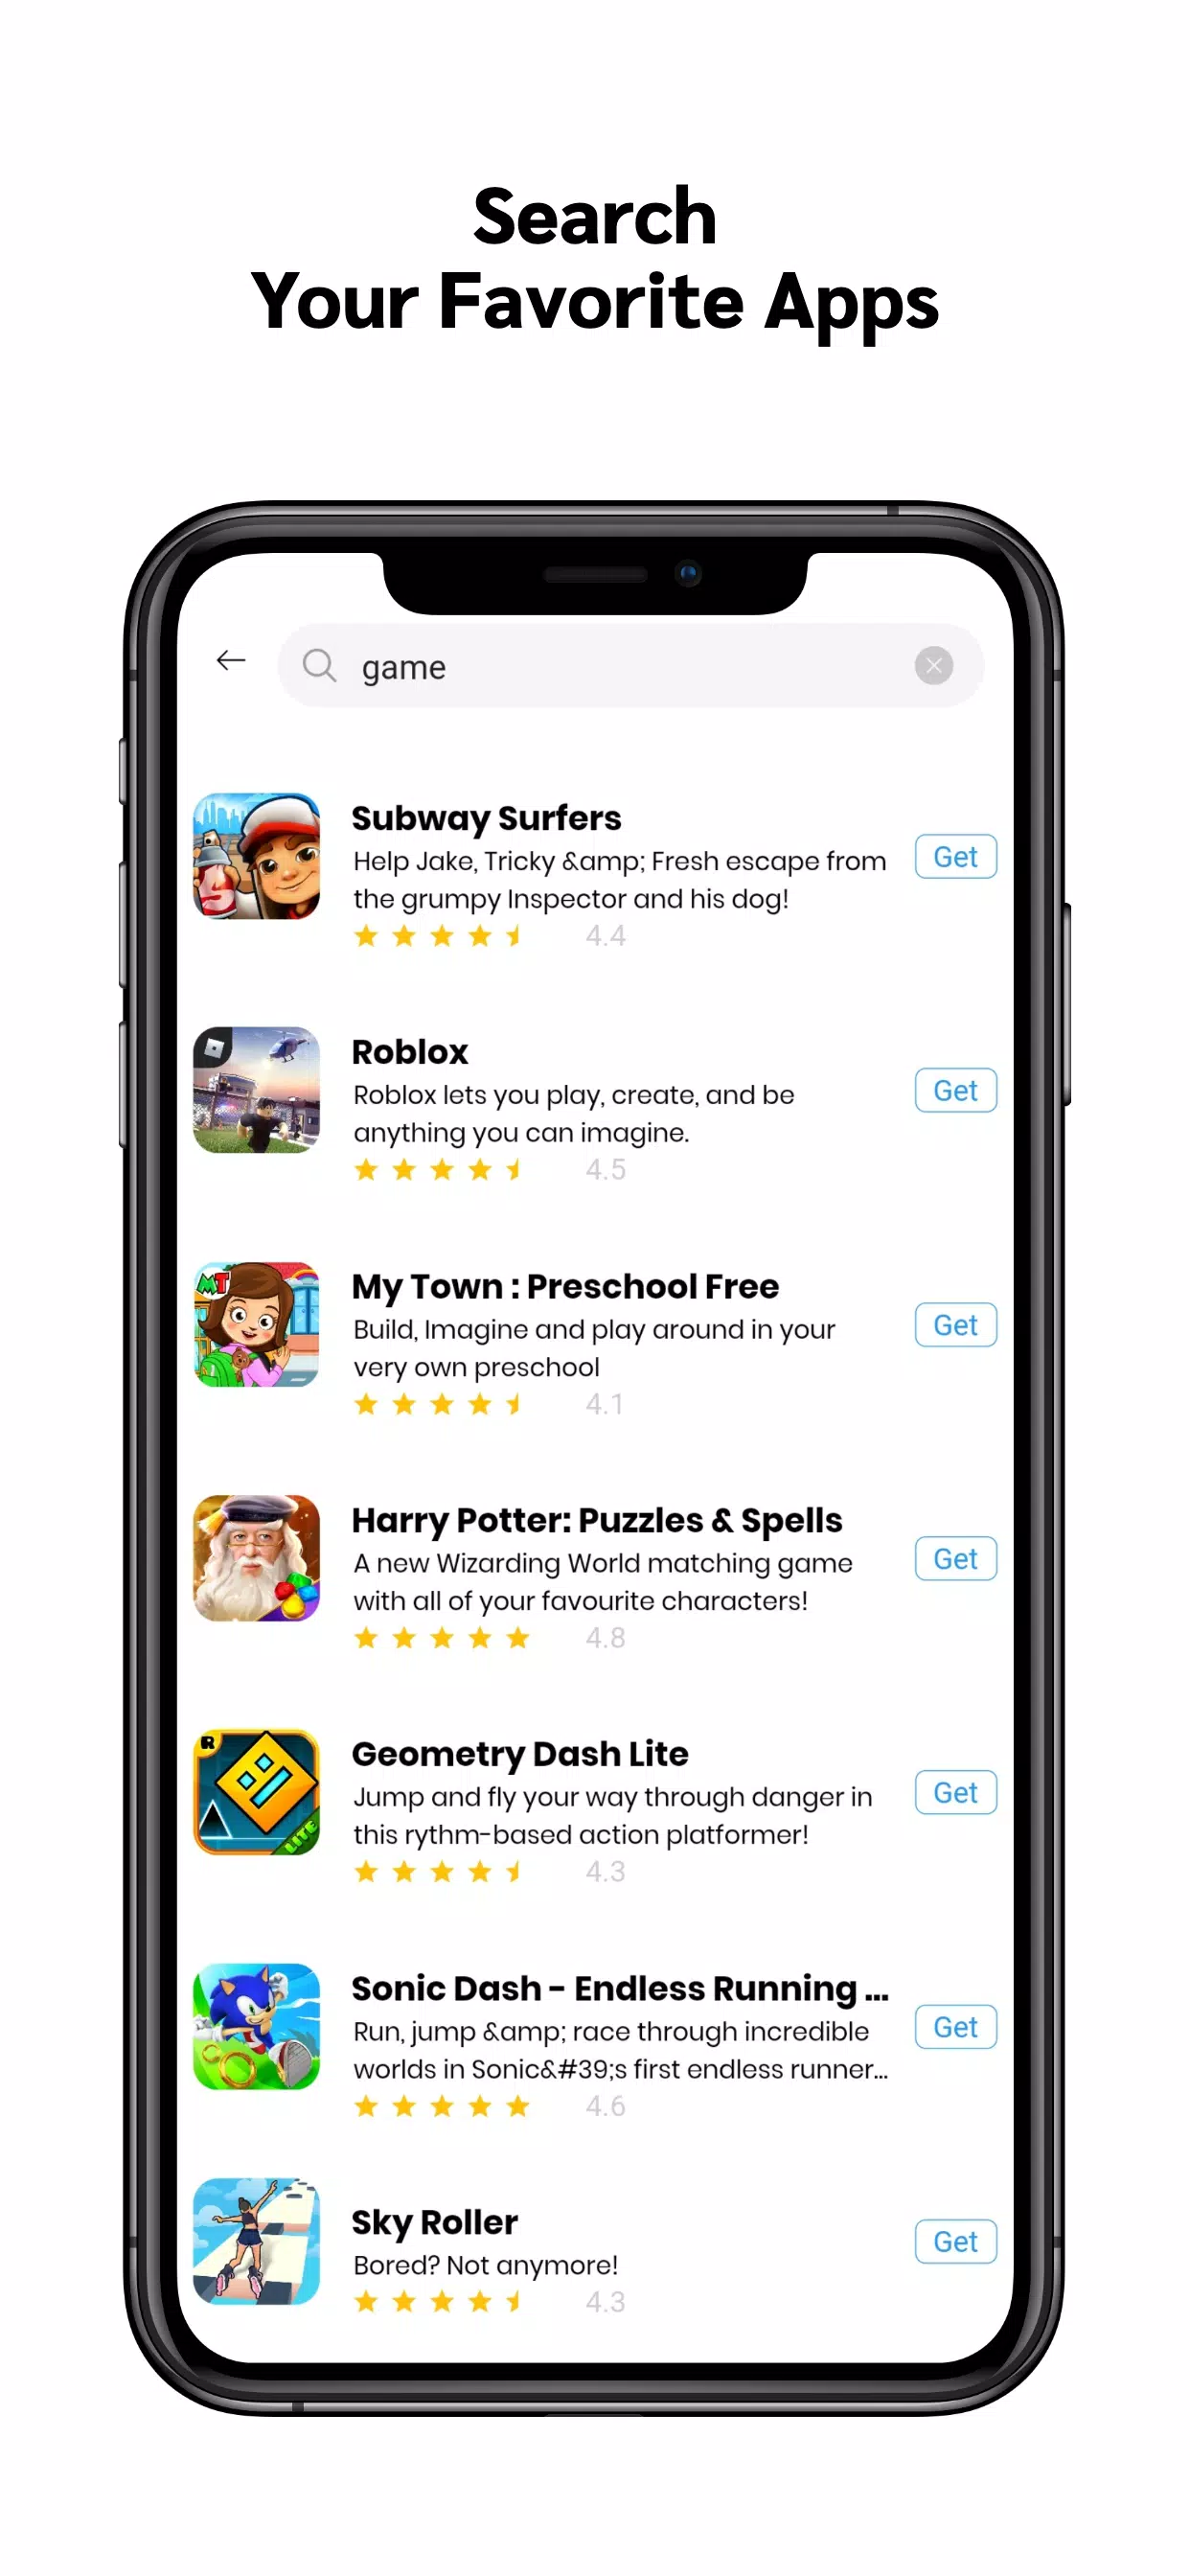 About: ROBLOX Developer (iOS App Store version)